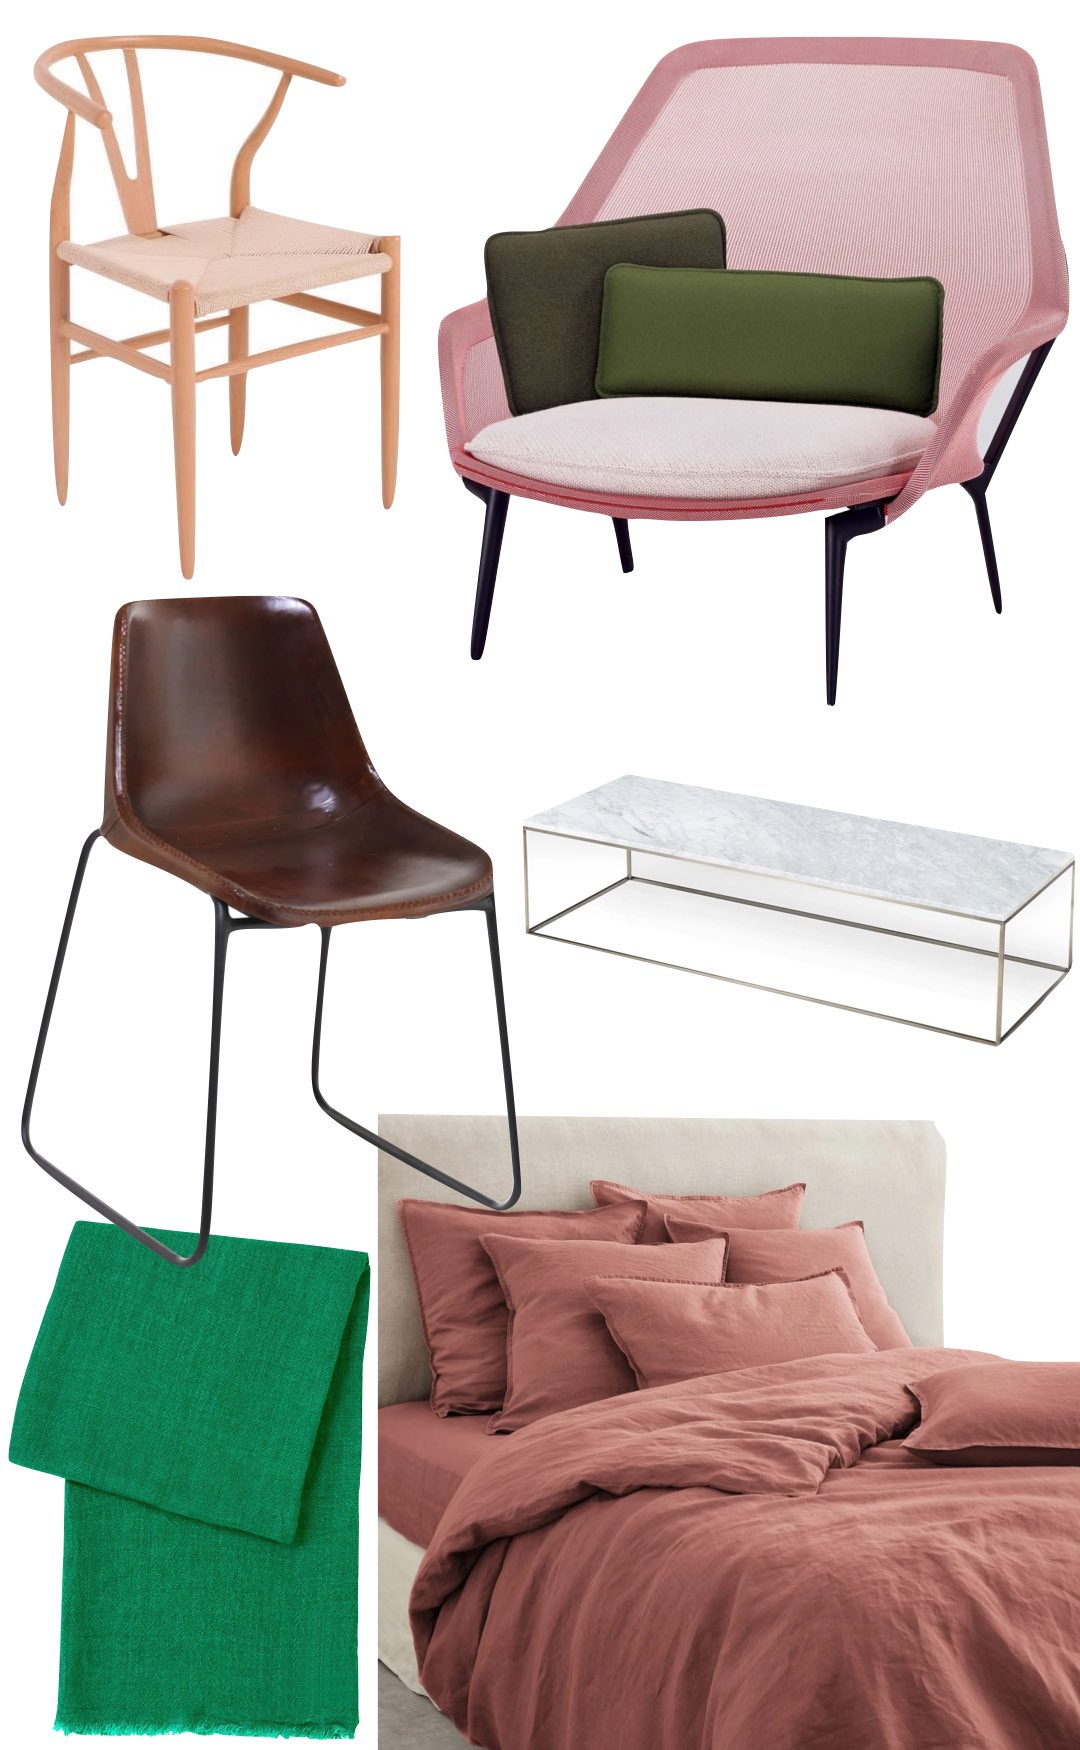 chaise design scandinave fauteuil toile rose coussin vert kaki